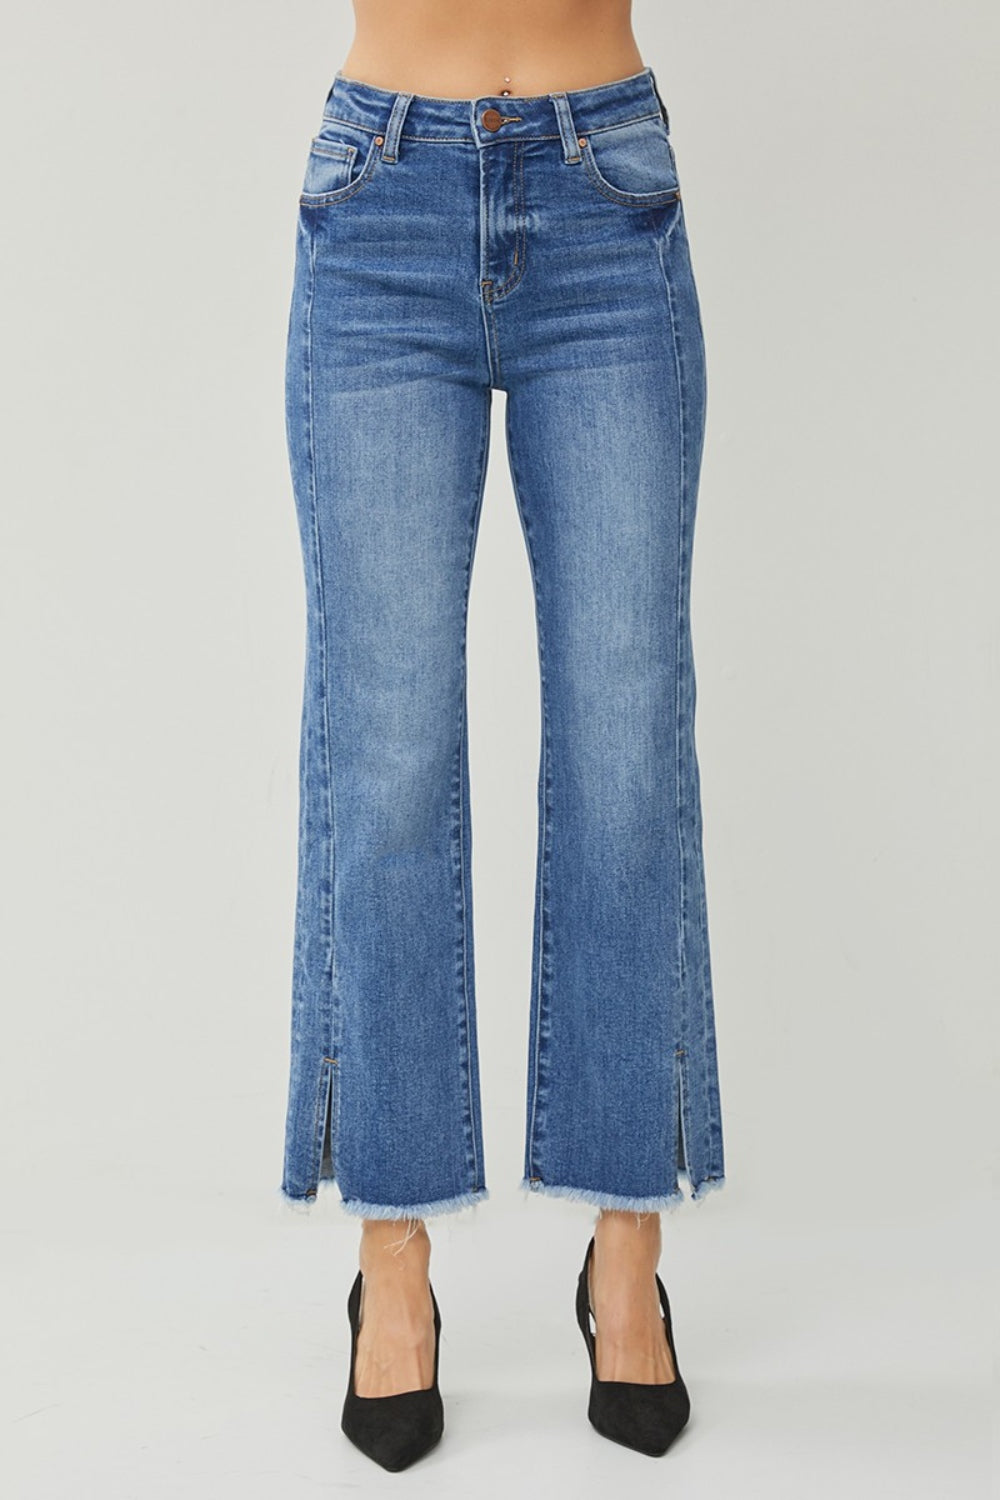 RISEN - Straight Leg Jeans - Front Seam - Inspired Eye Boutique